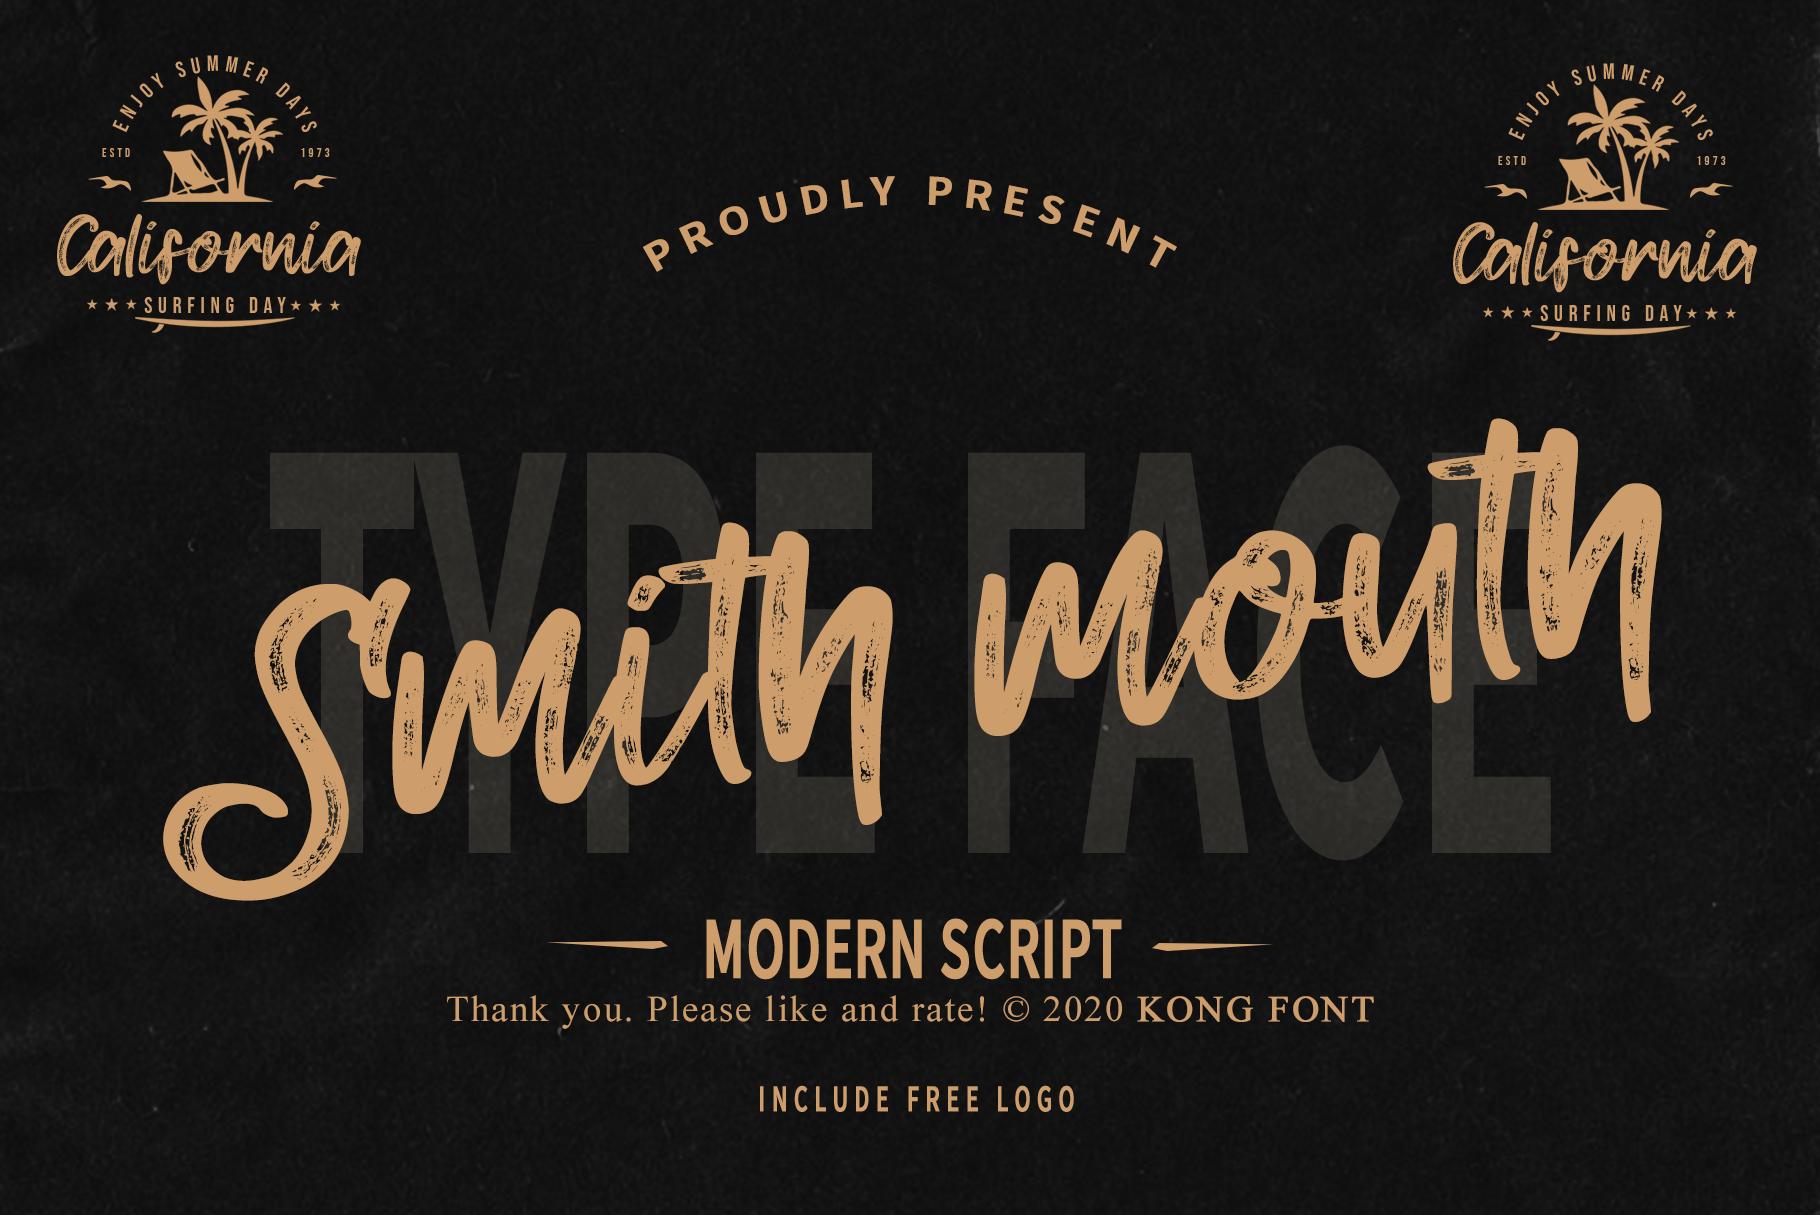 Smith mouth